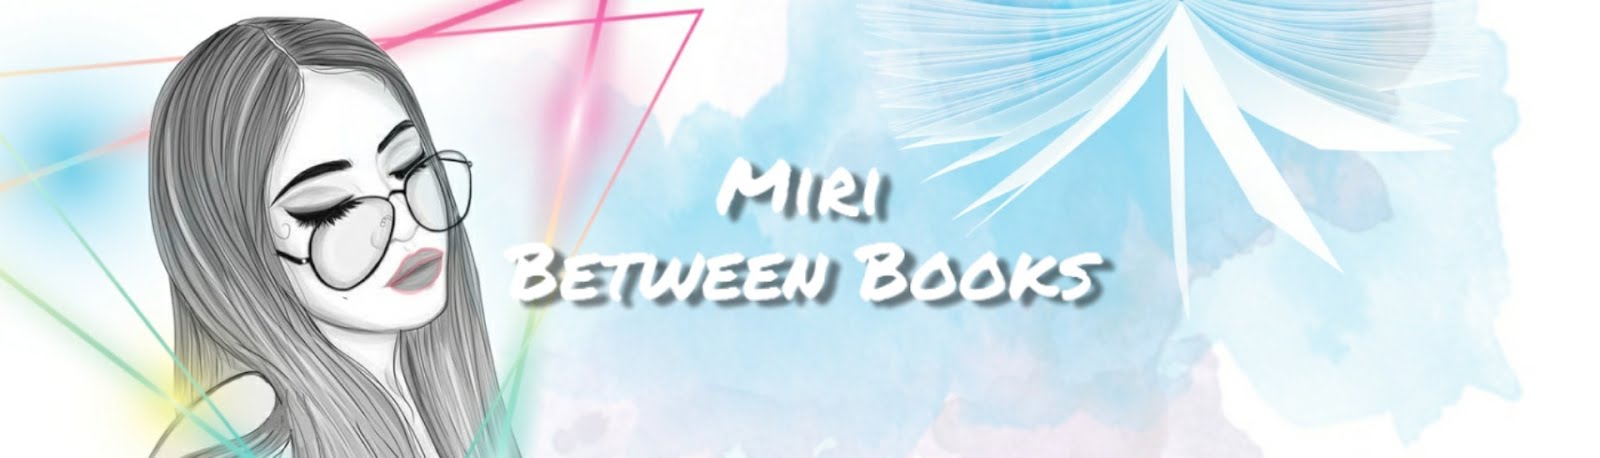 Miri Between Books